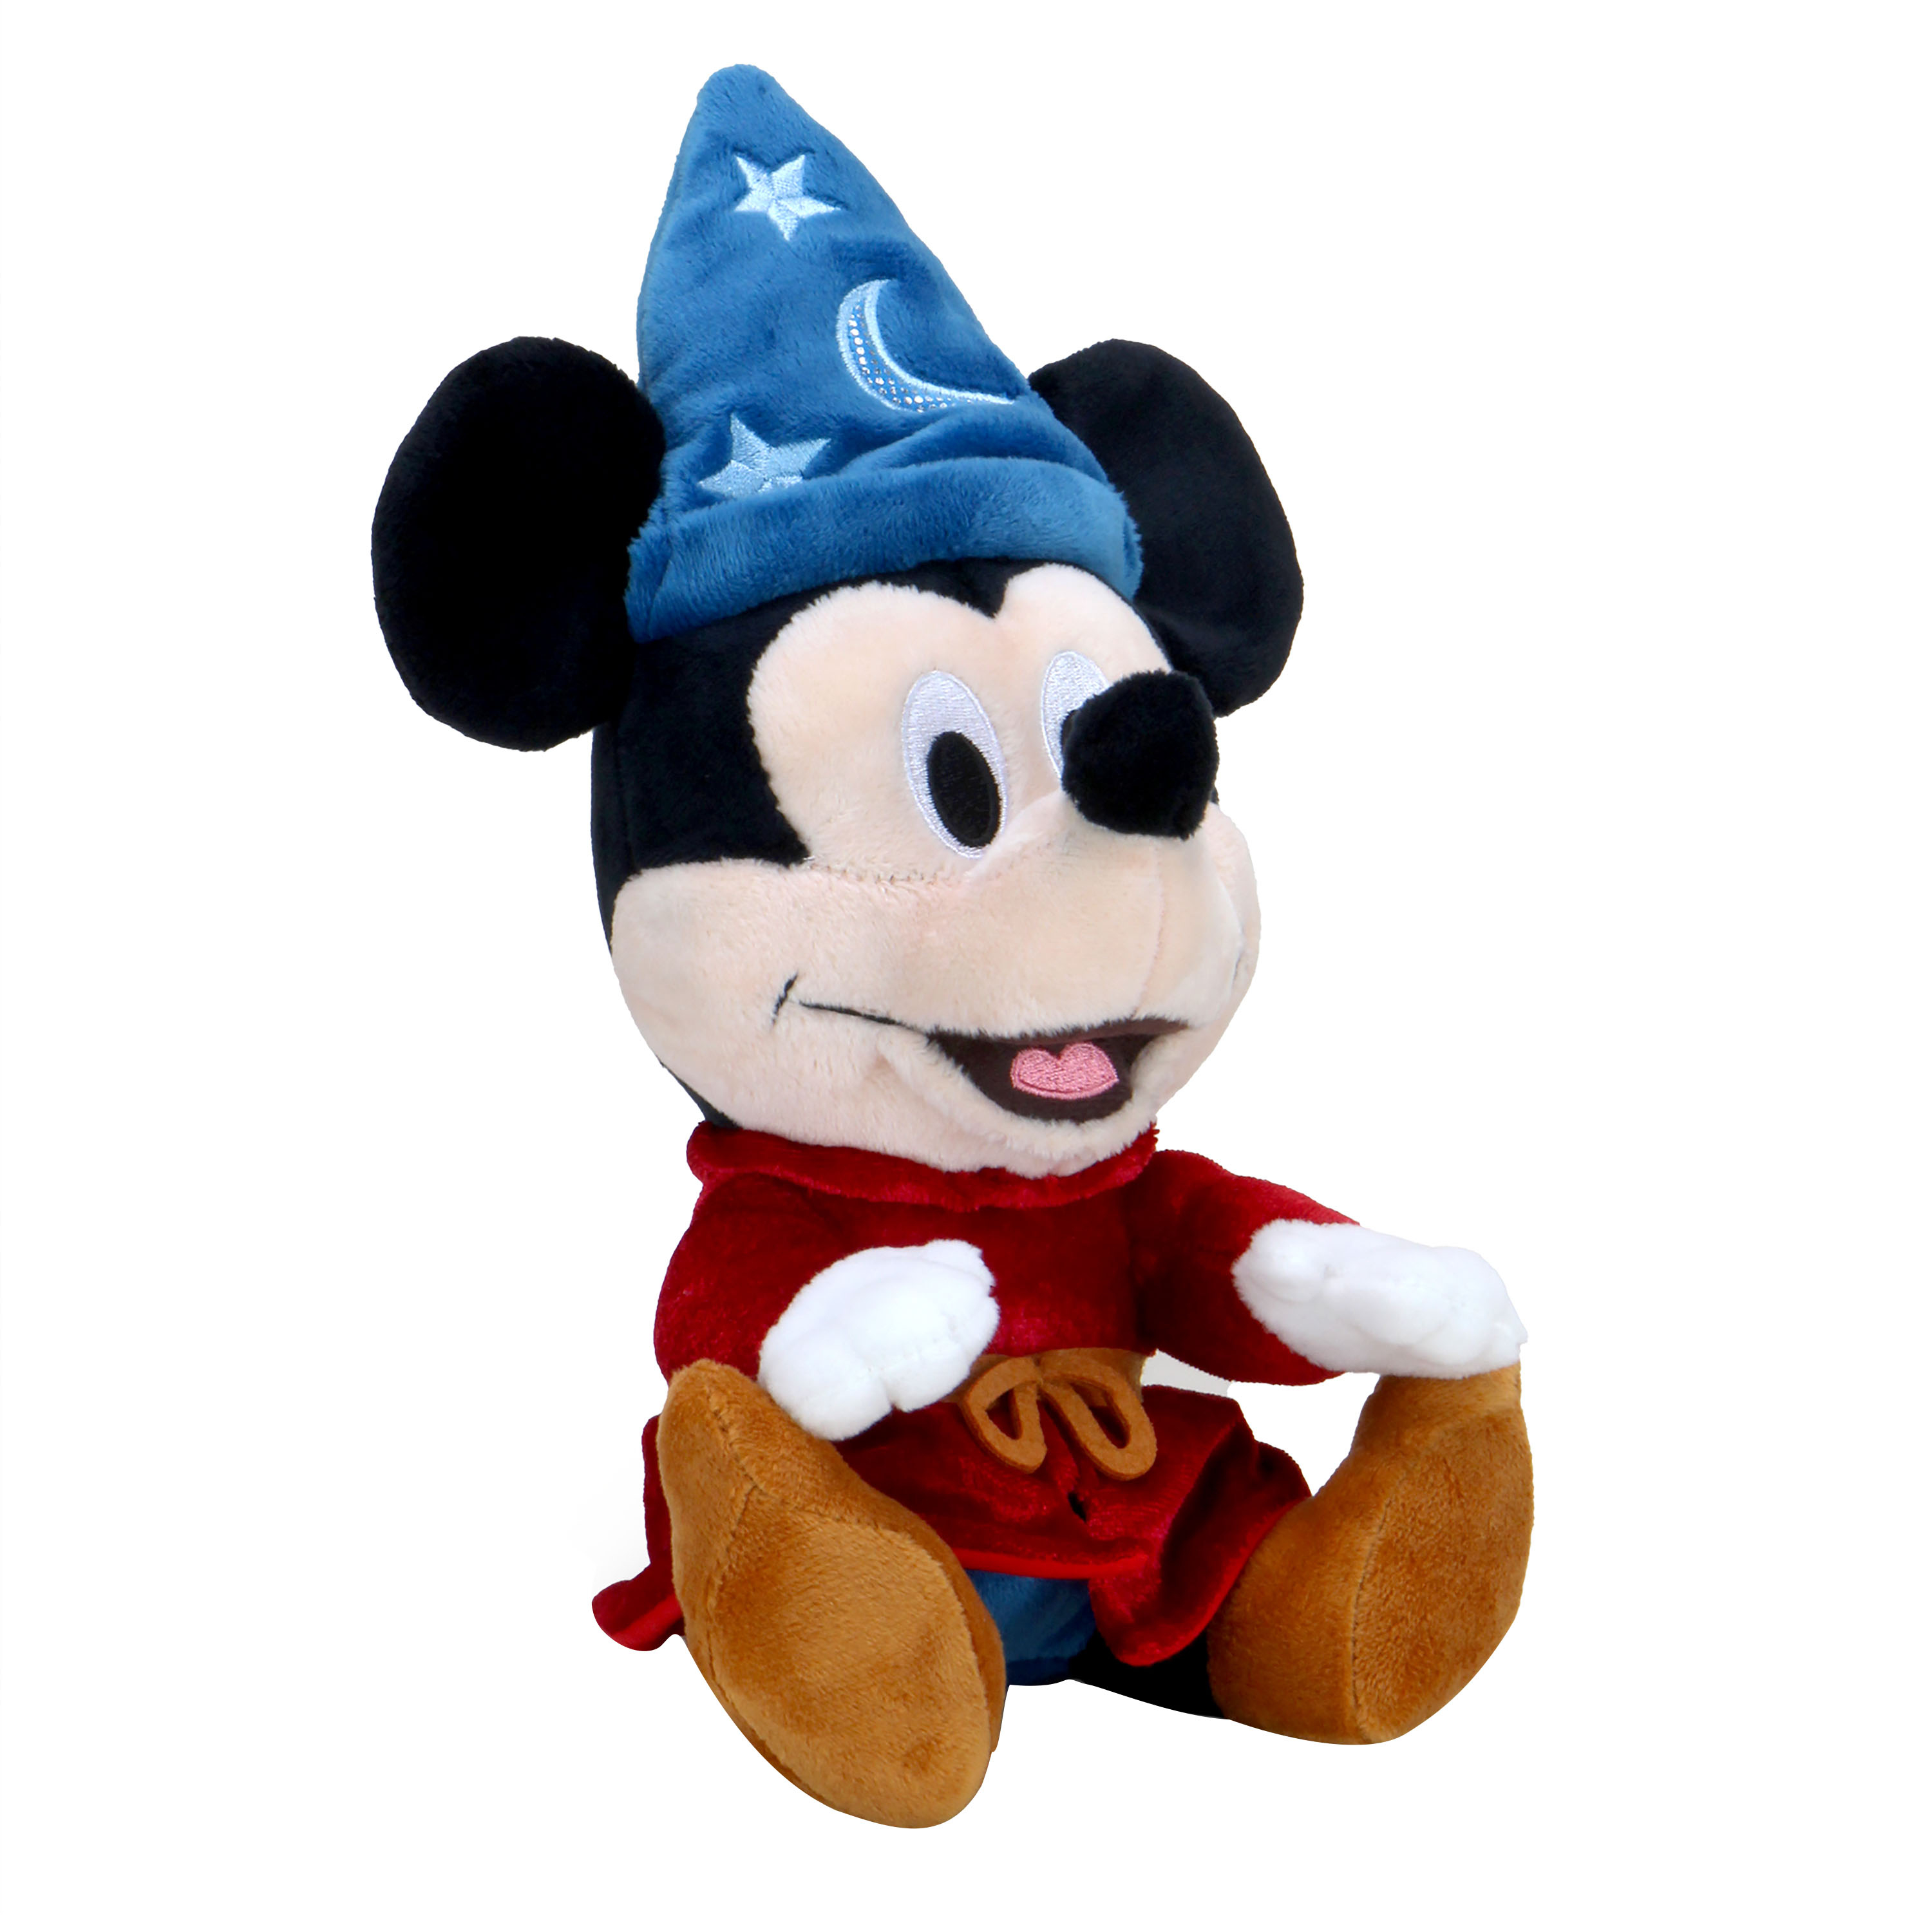 Disney Minnie Mouse 8 Phunny Plush by Kidrobot